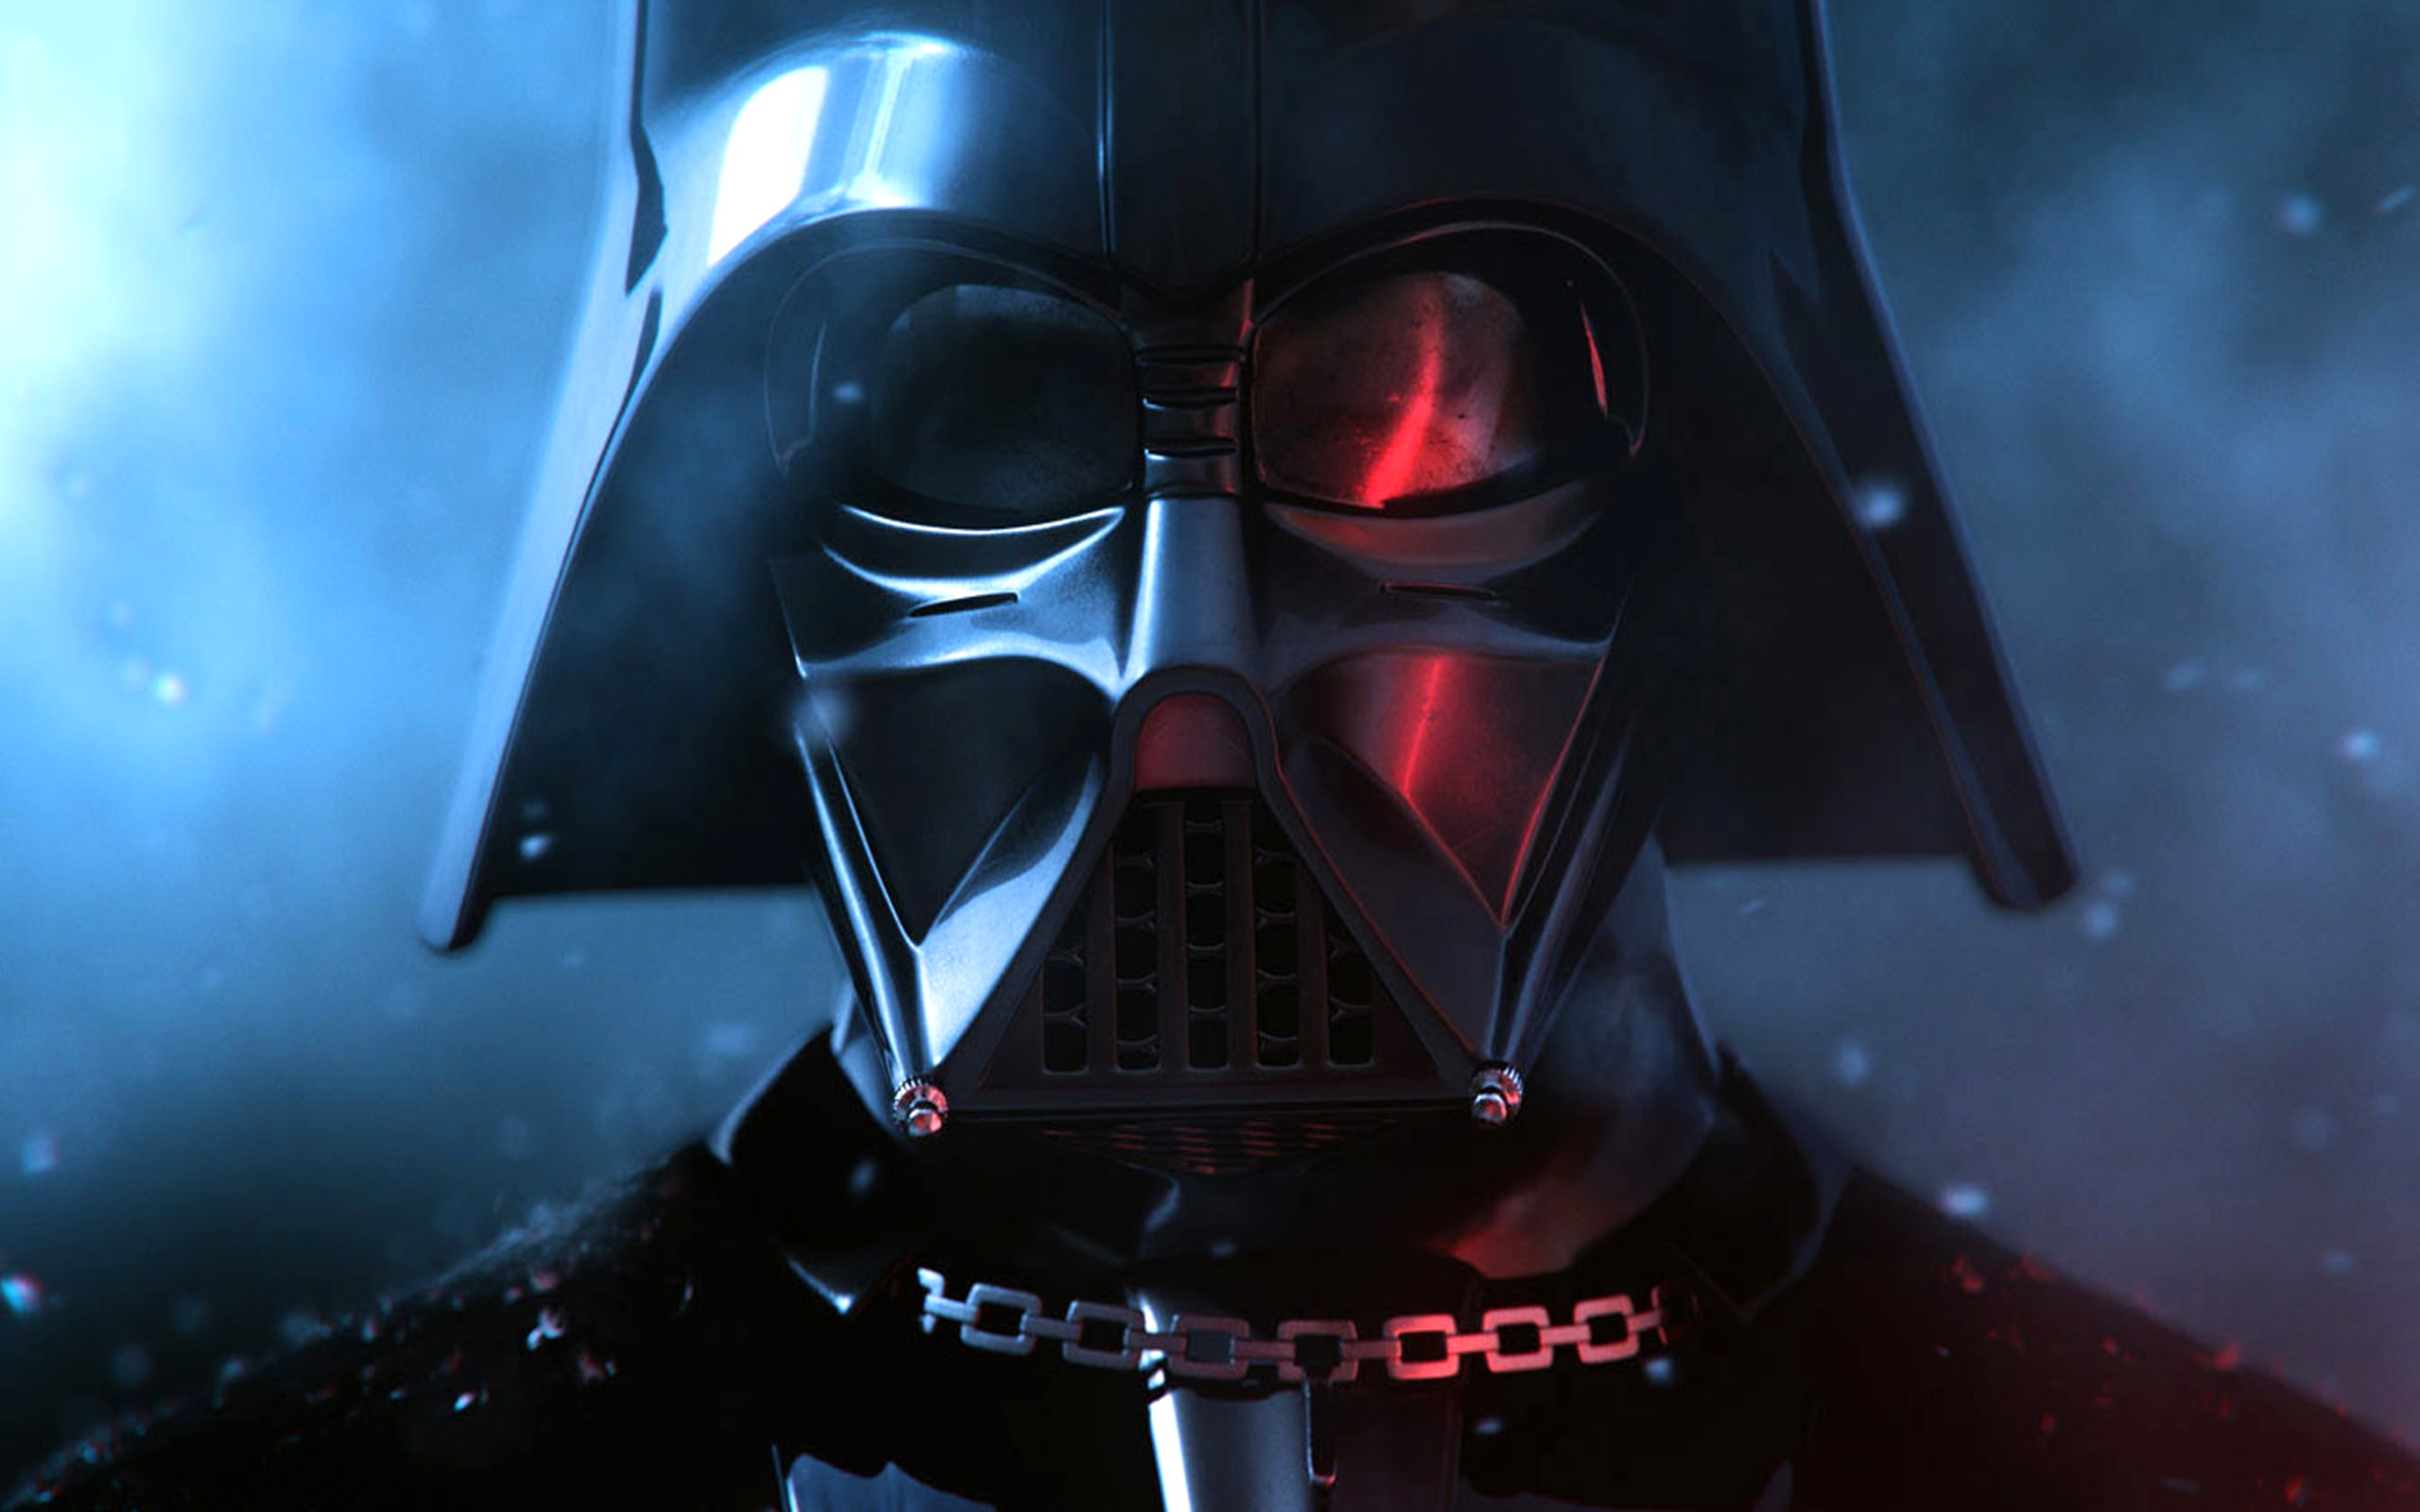 Darth Vader 2, cockpit, close-up, technology, air vehicle, front view